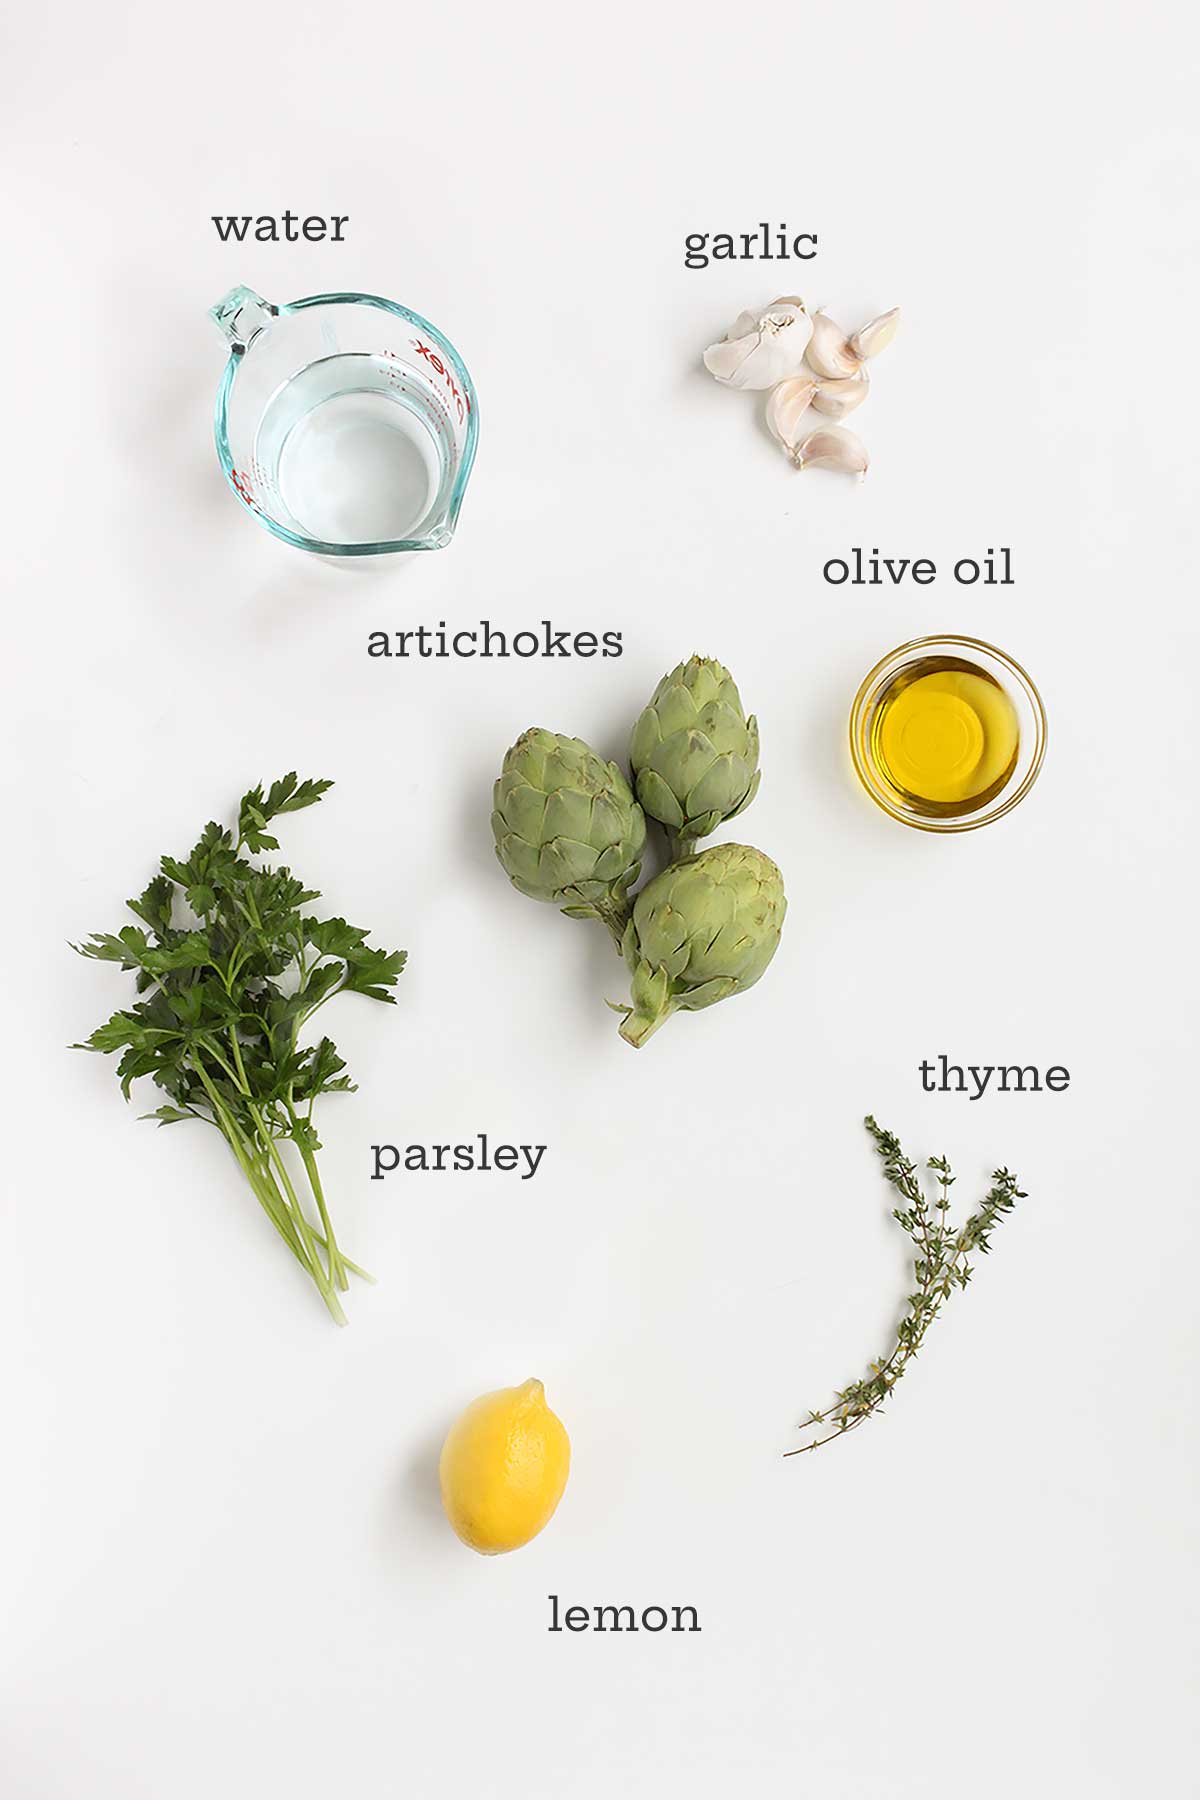 Ingredients for braised artichokes -- artichokes, parsley, thyme, lemon, garlic, oil, and water.